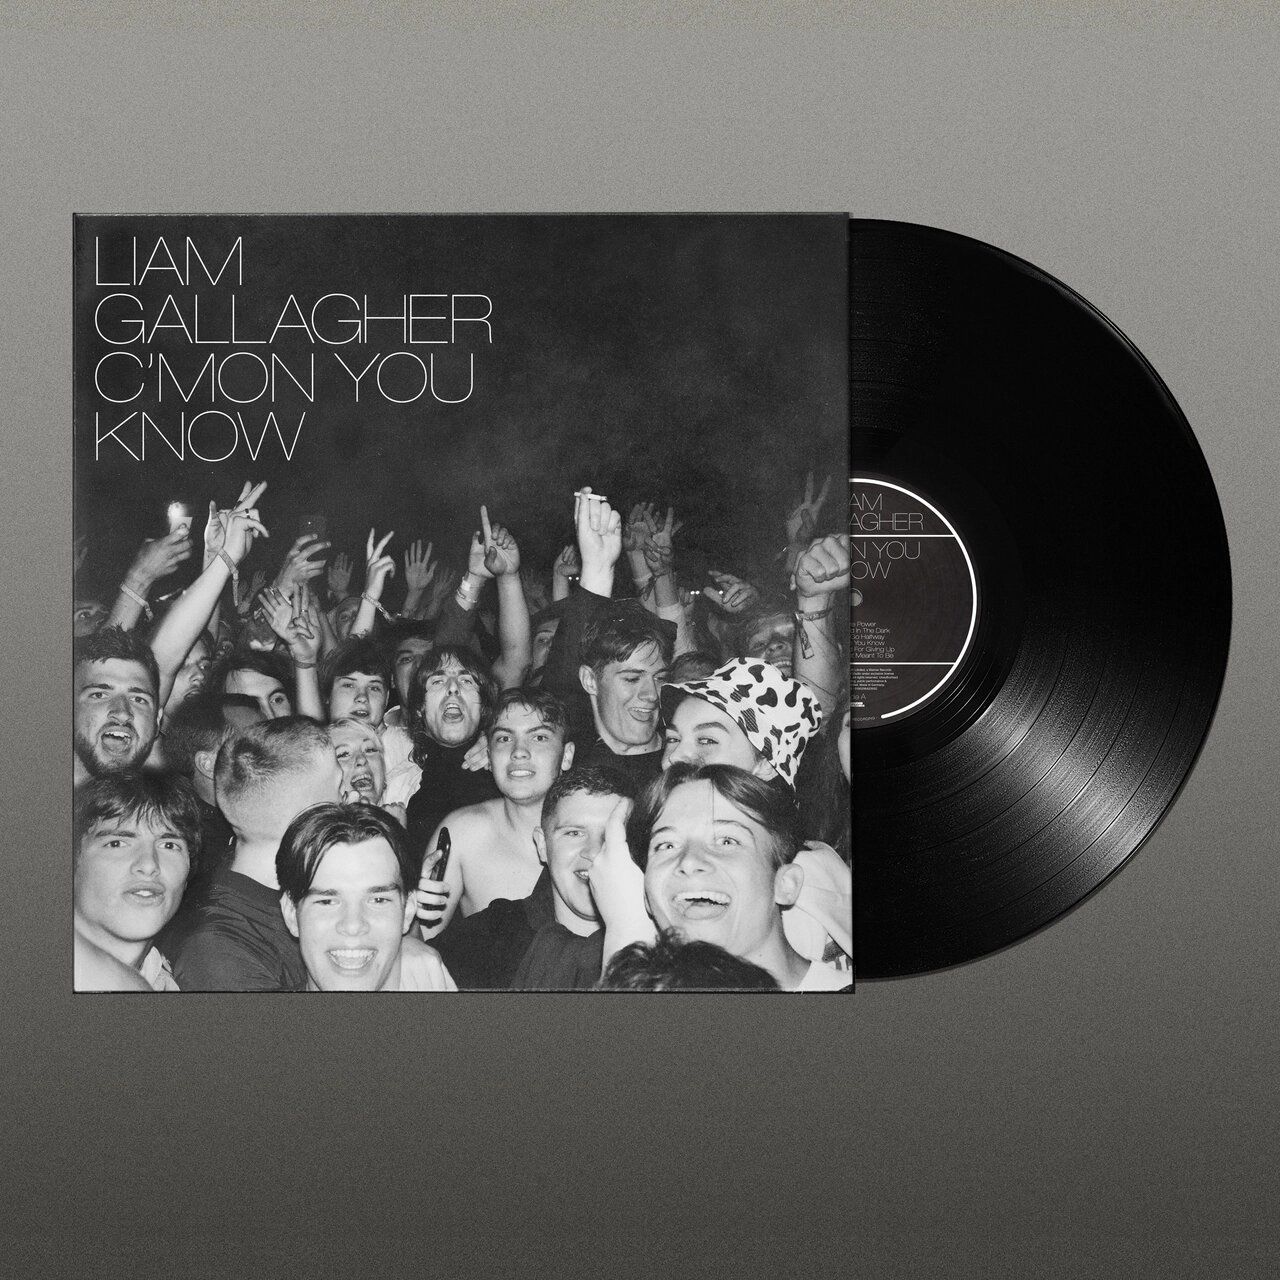 Liam Gallagher - C'mon You Know: Gatefold Black Vinyl LP - Sound 